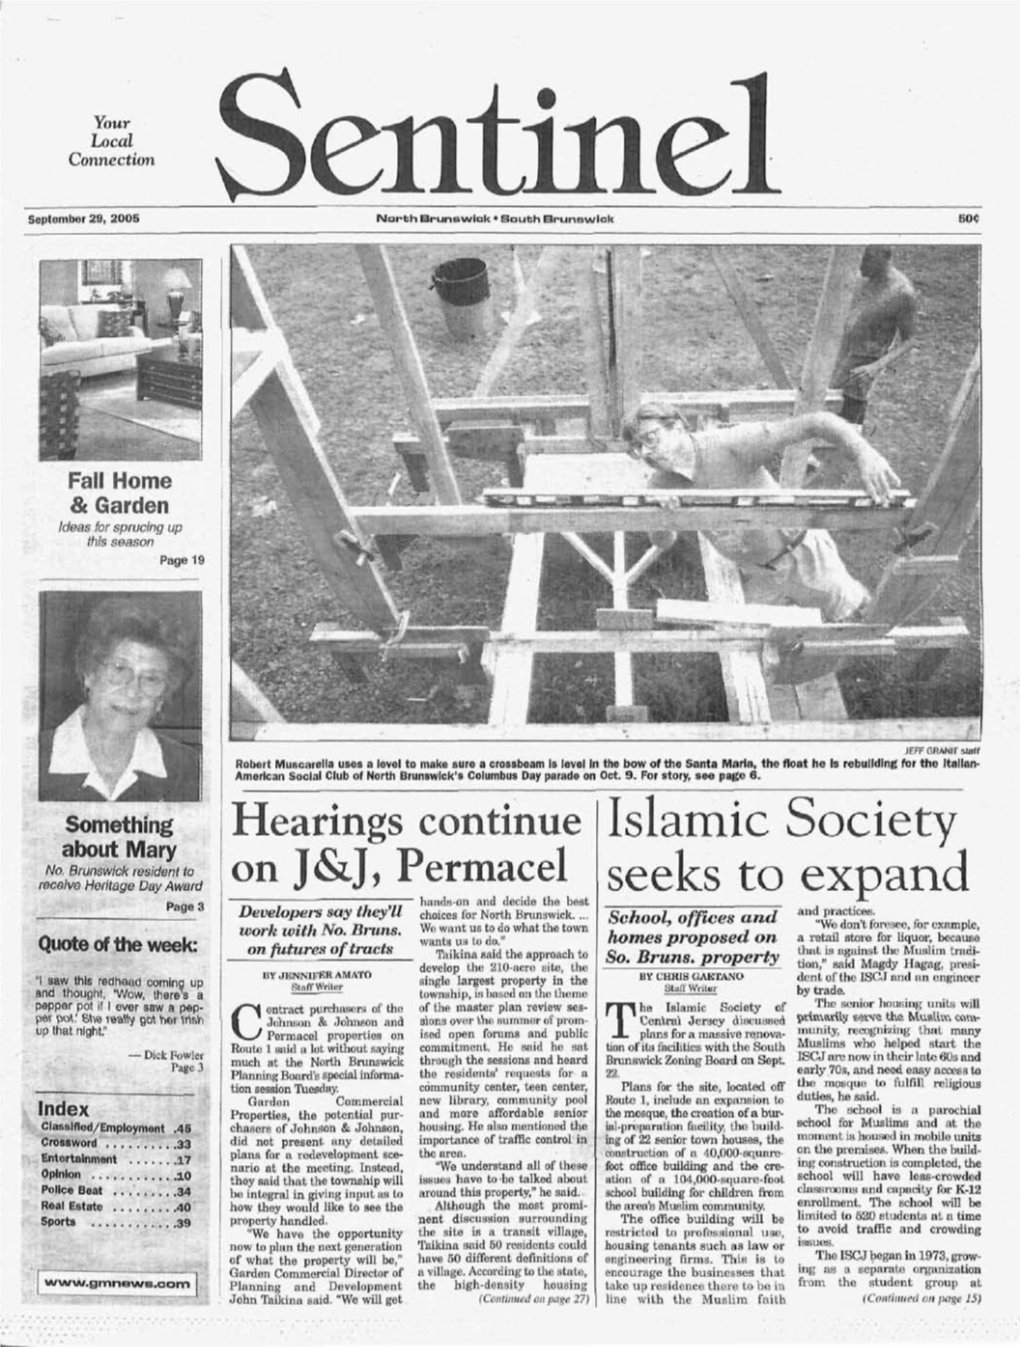 Islamic Society Seeks to Expand